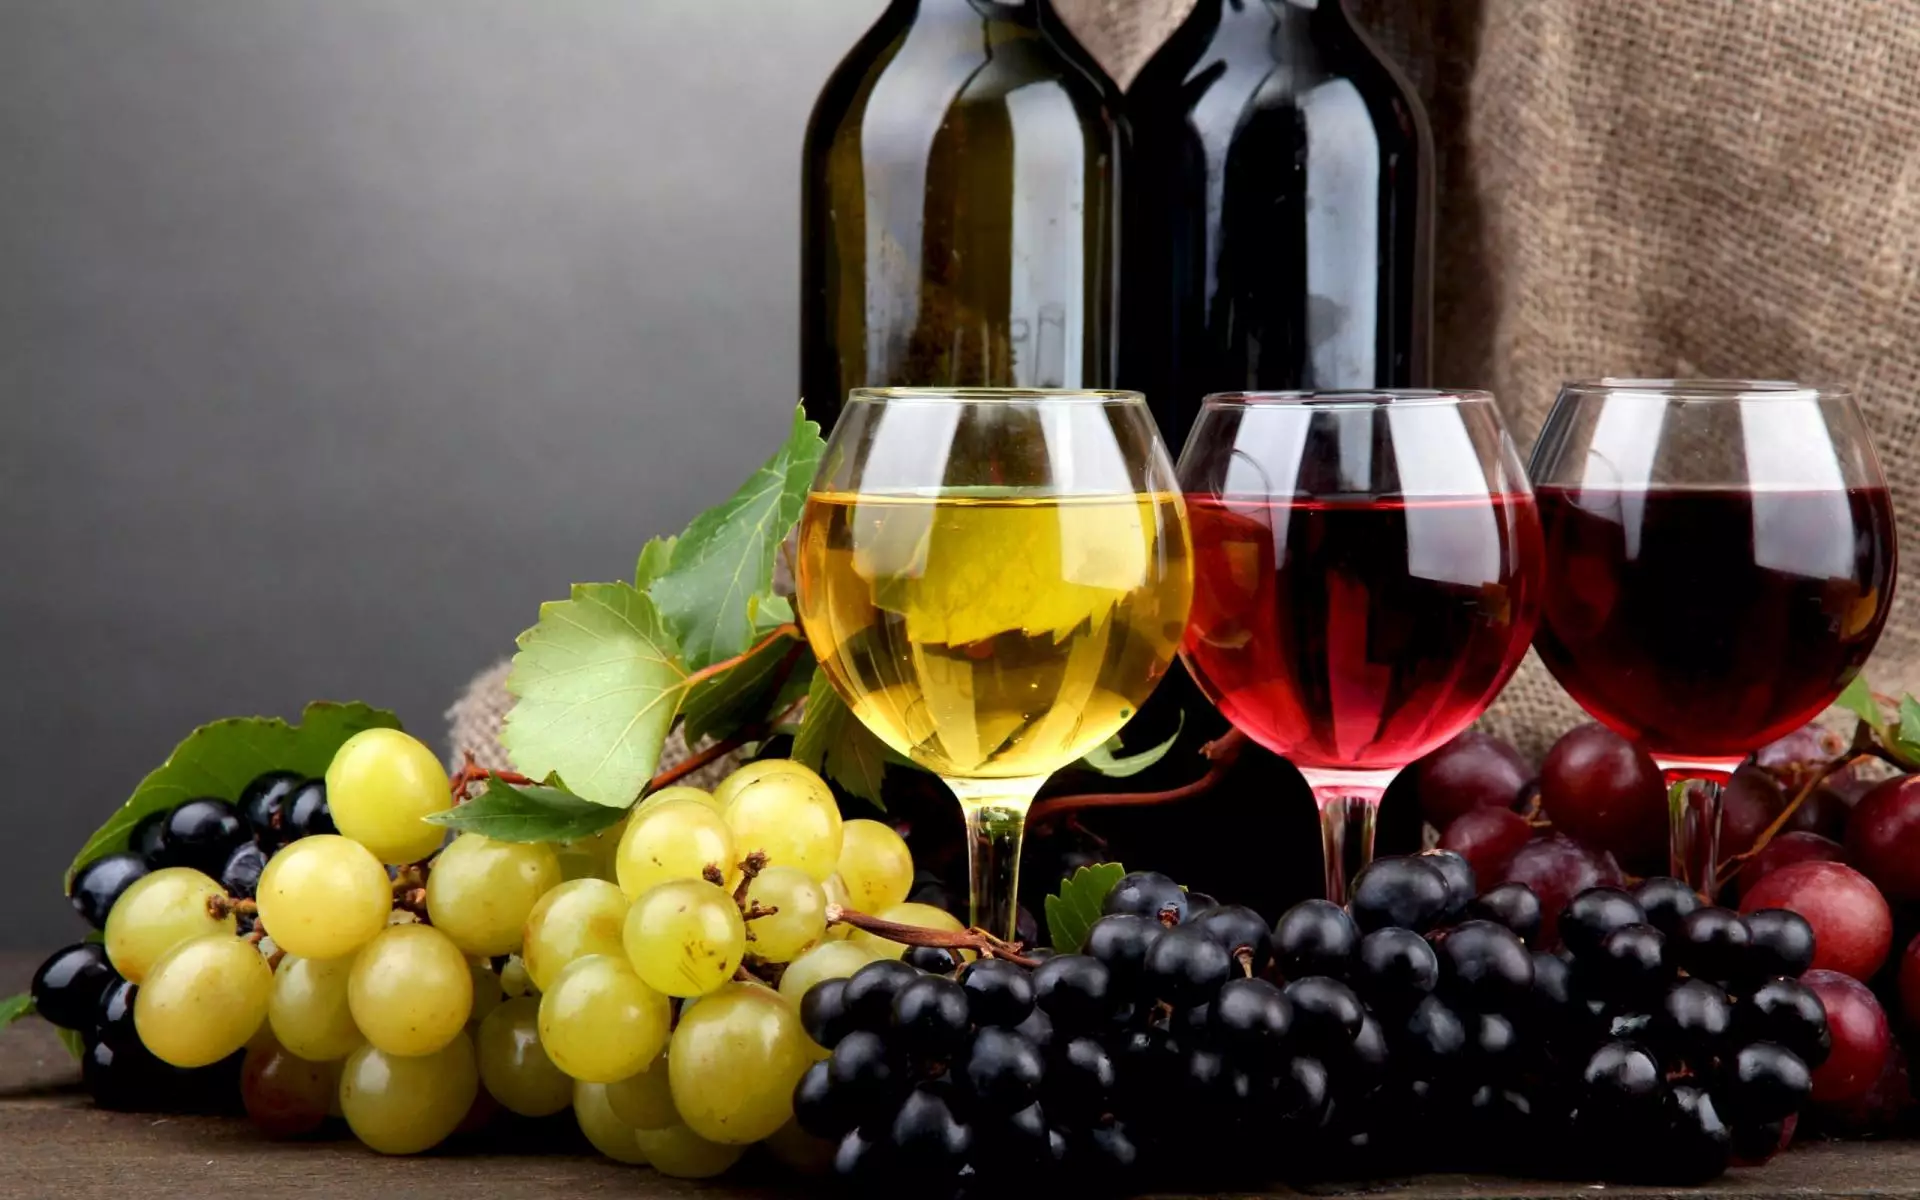 Российские производители предупредили о подорожании вина